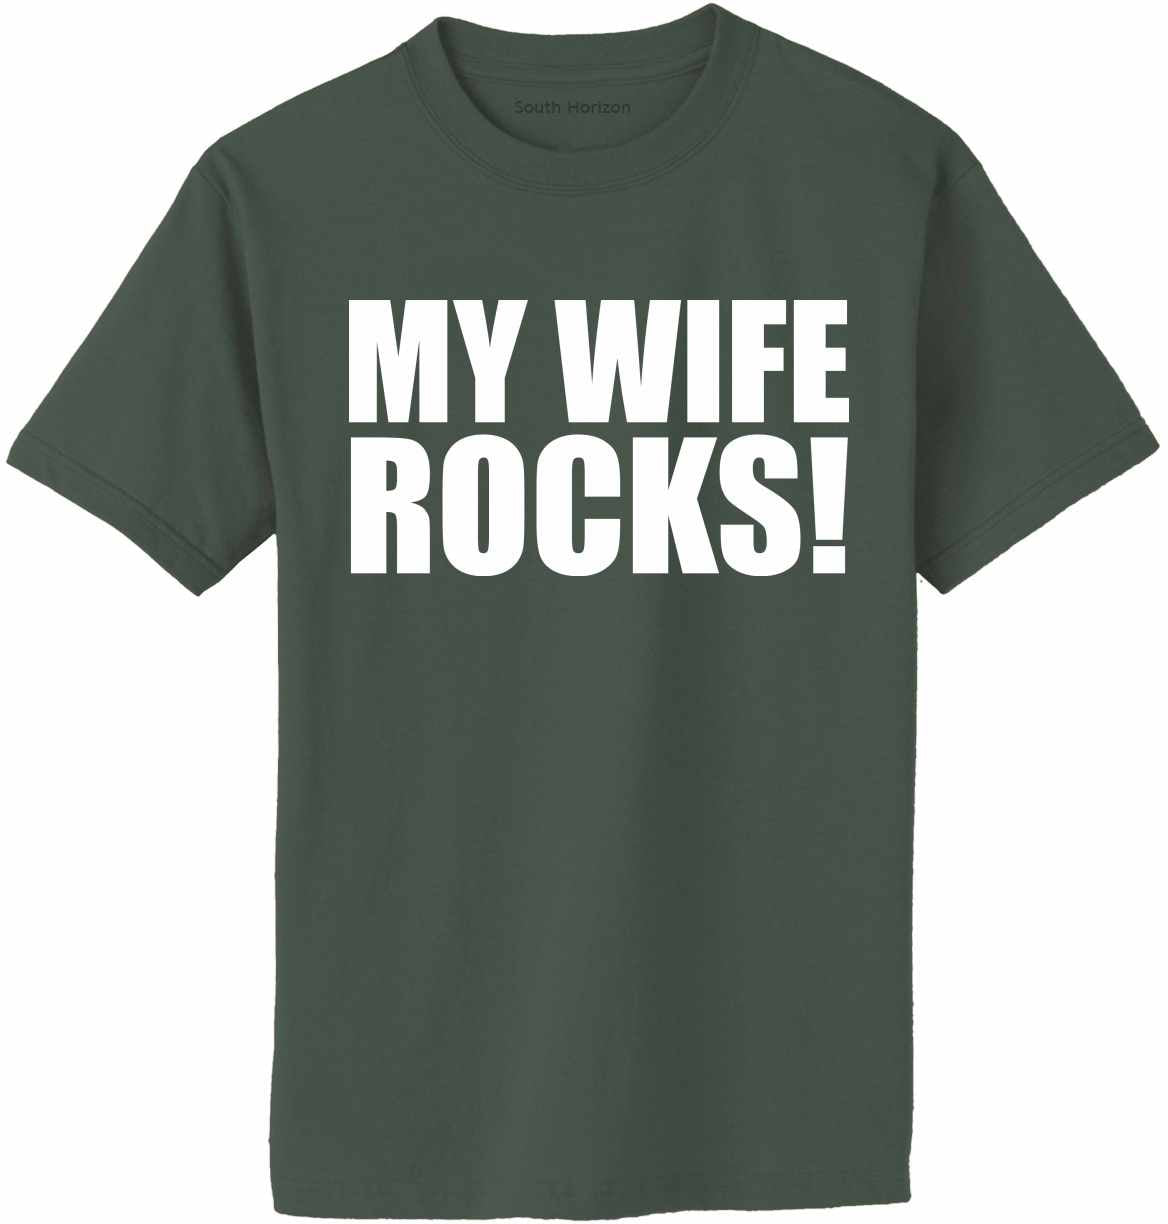 MY WIFE ROCKS Adult T-Shirt (#723-1)